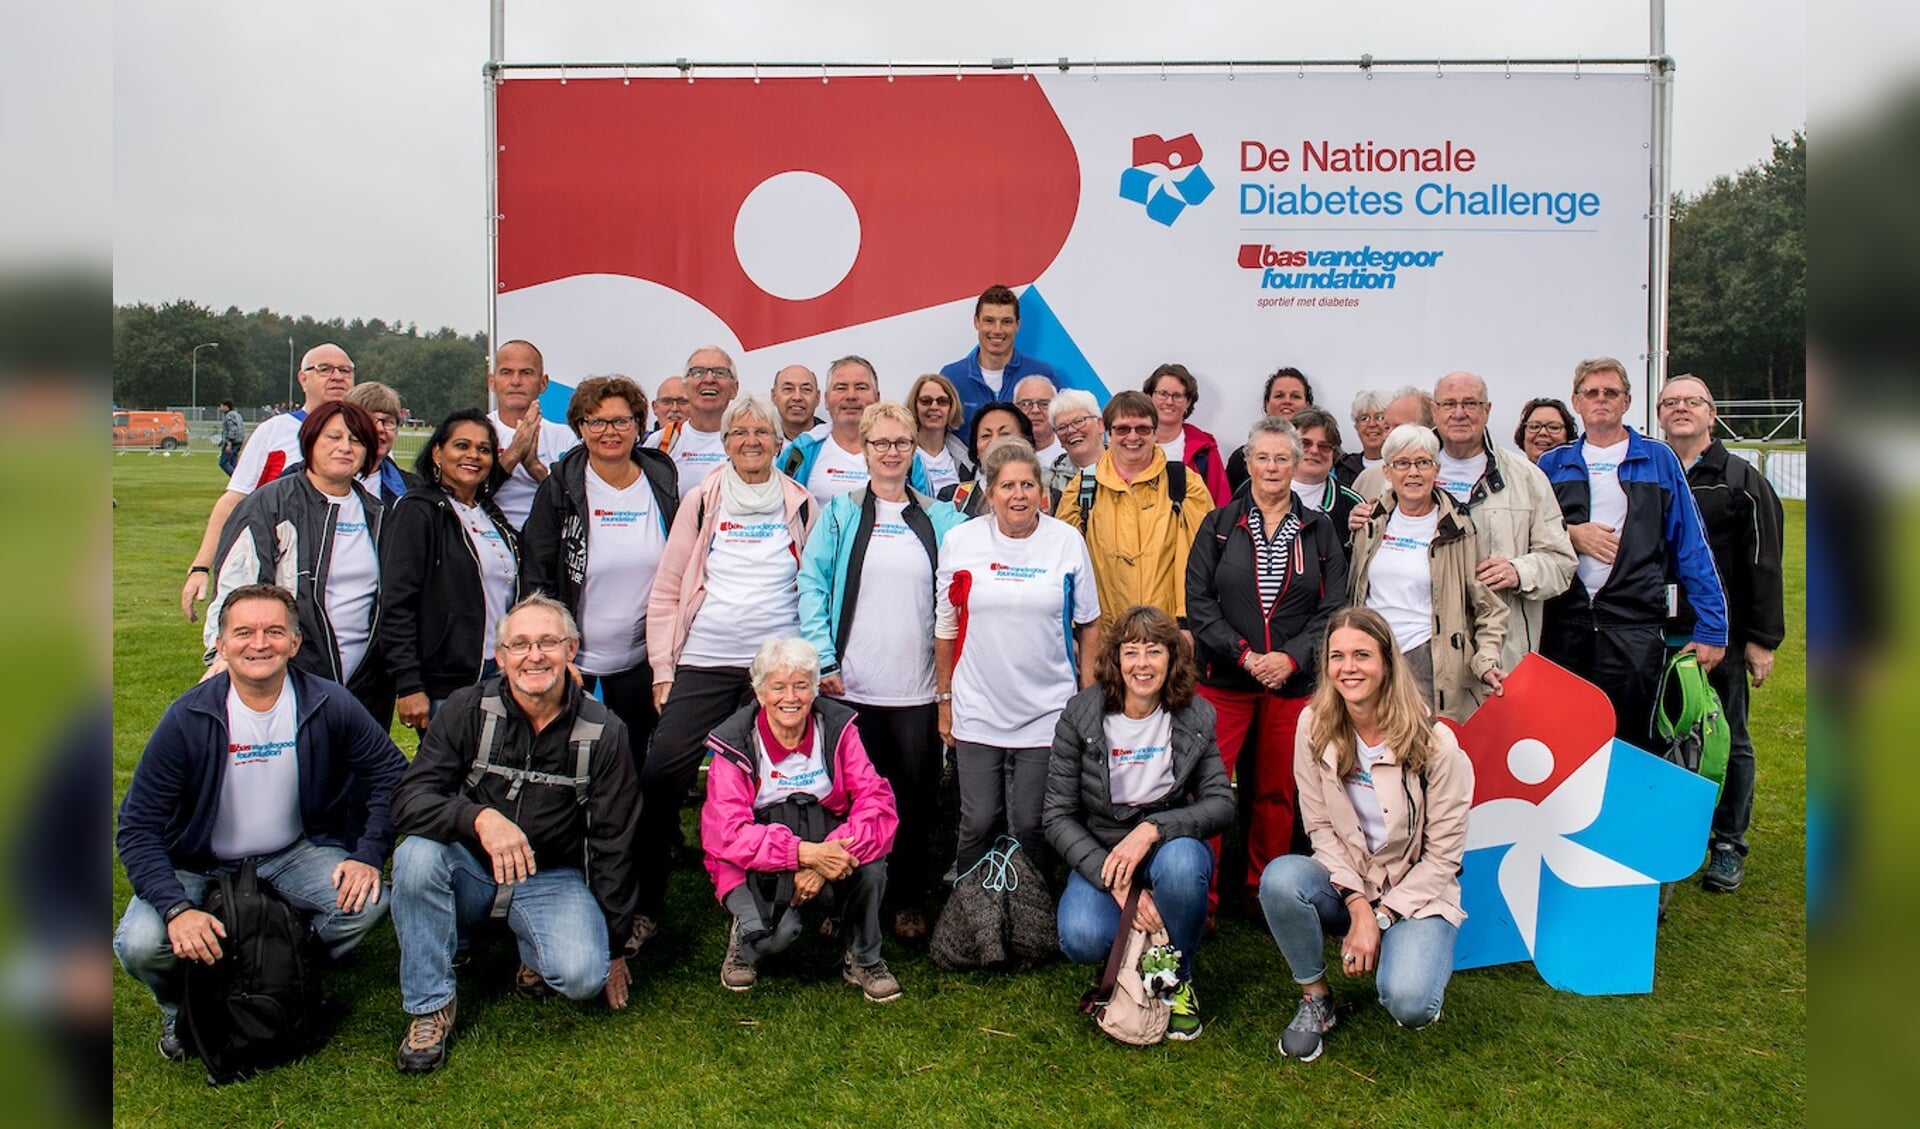 De groep van het Doktershuis in Ridderkerk die meedeed aan de Nationale Diabetes Challenge